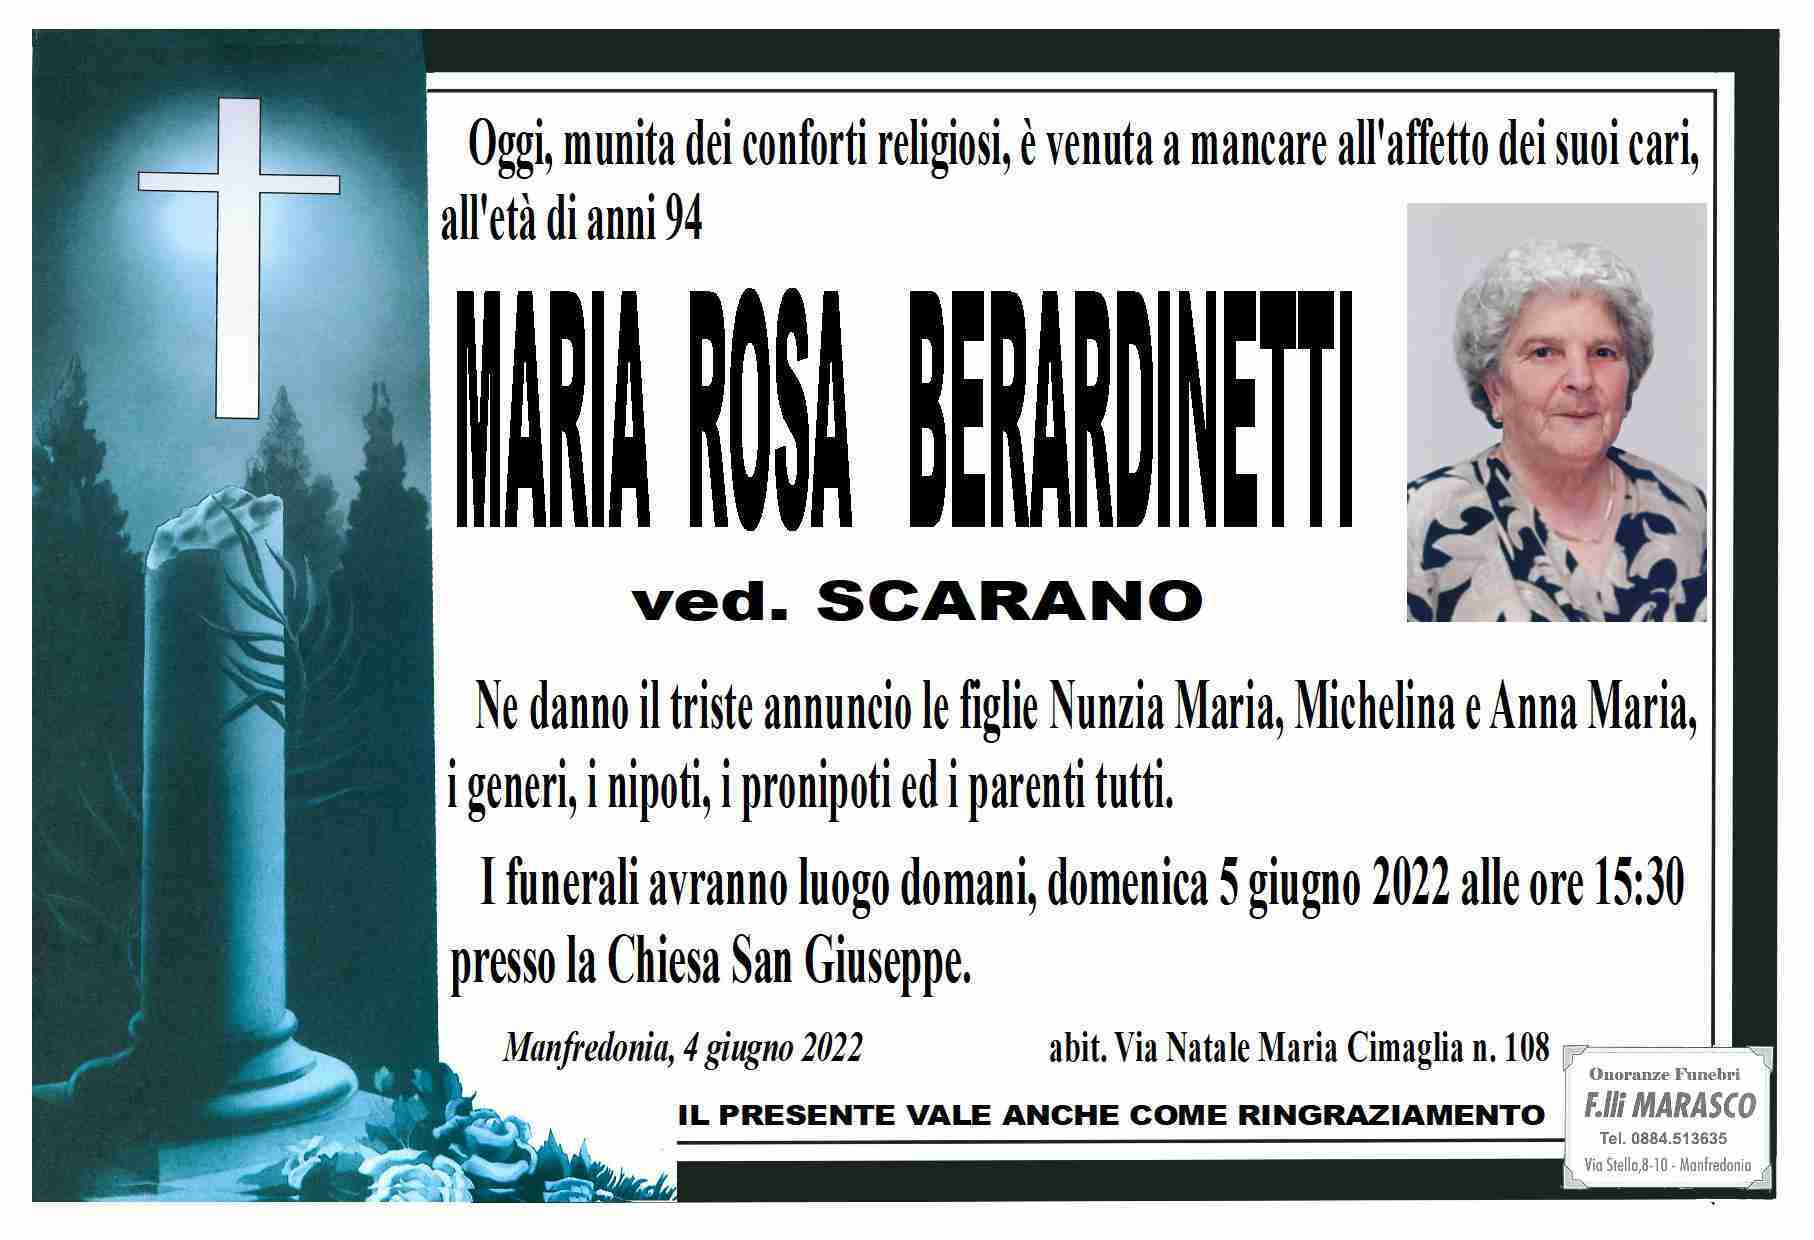 Maria Rosa Berardinetti